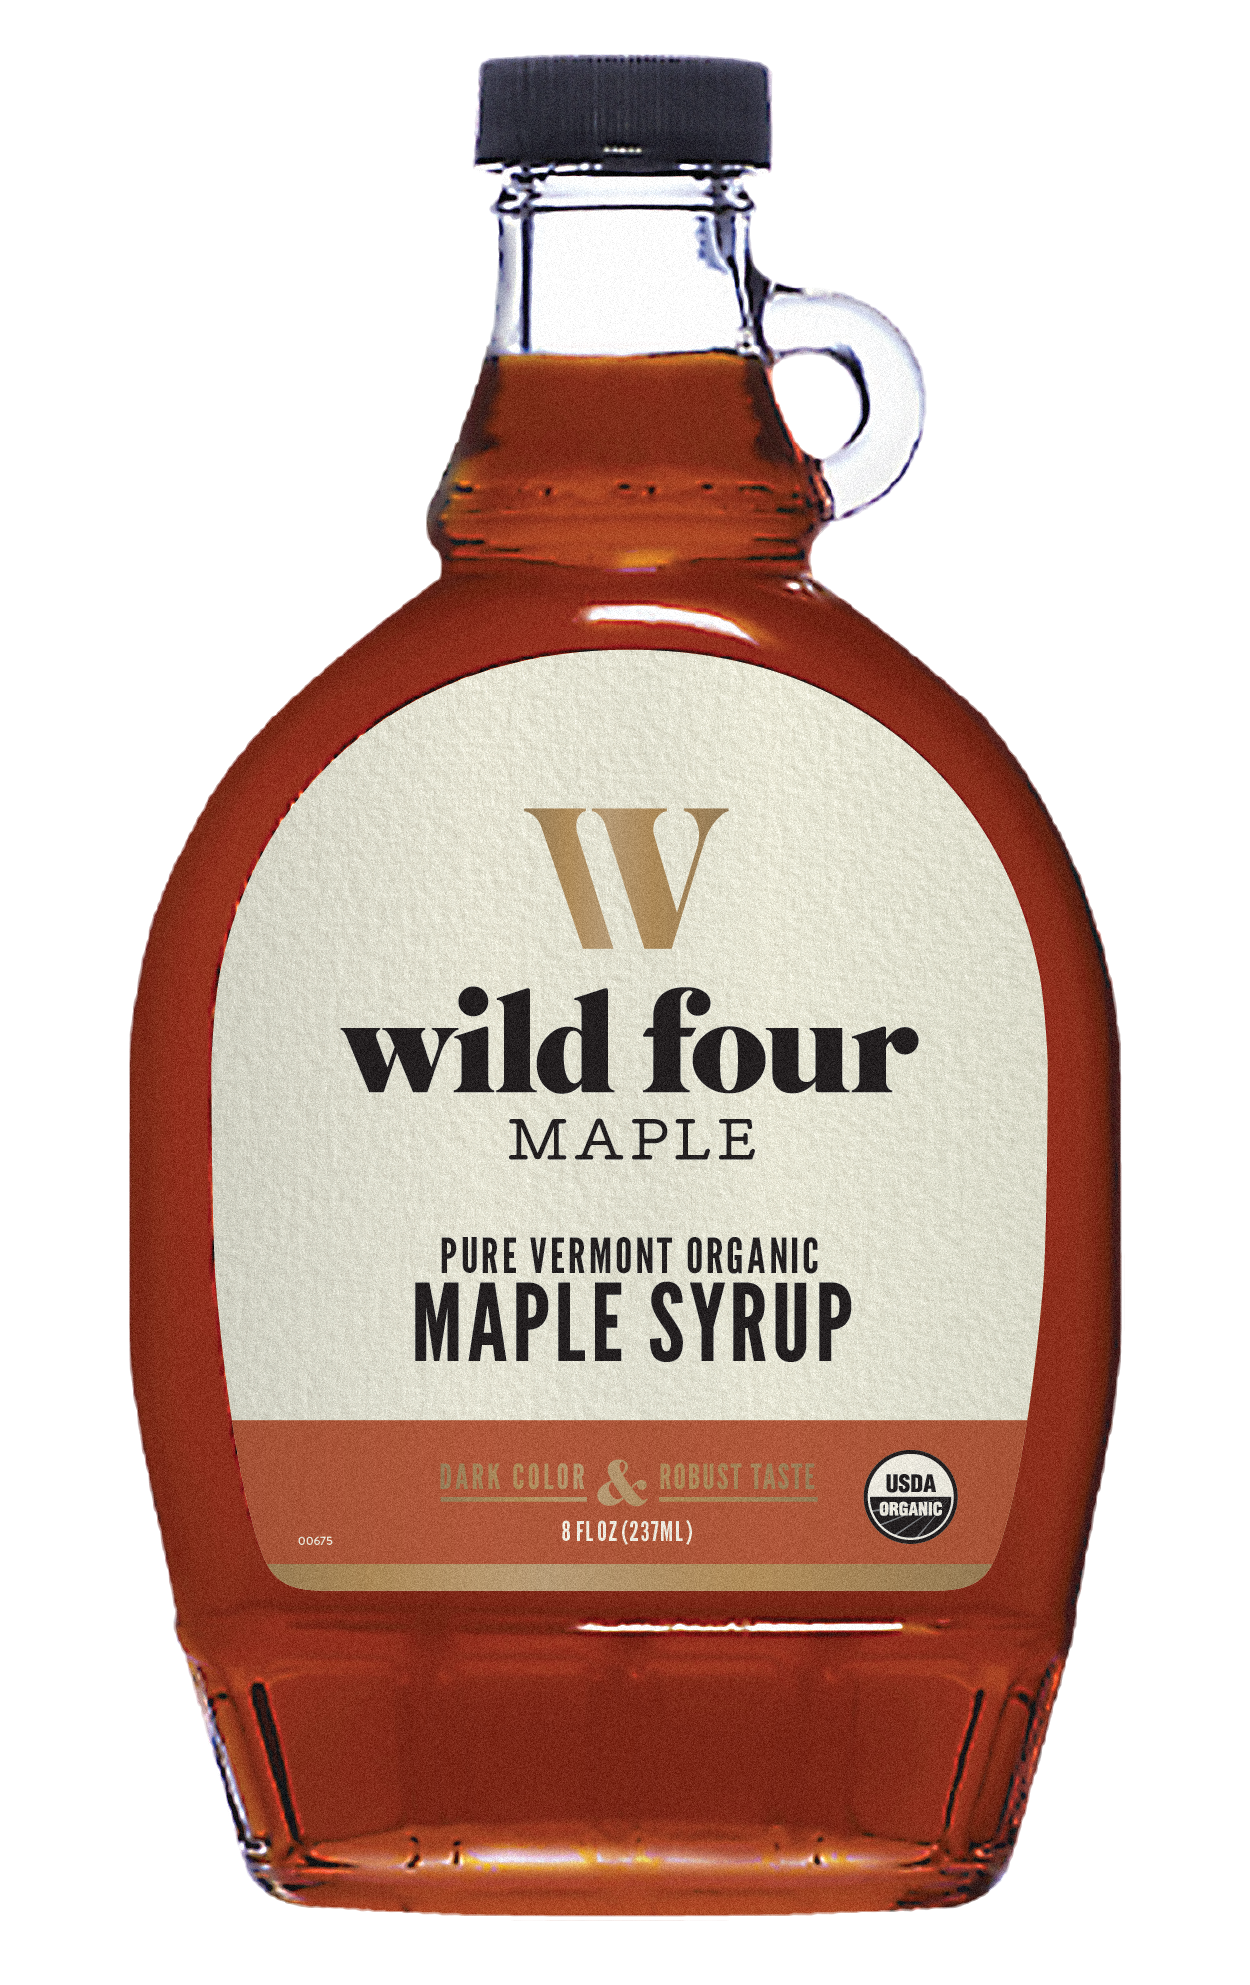 Wild Four Grade A Dark Organic Maple Syrup 12 units per case 8.0 fl